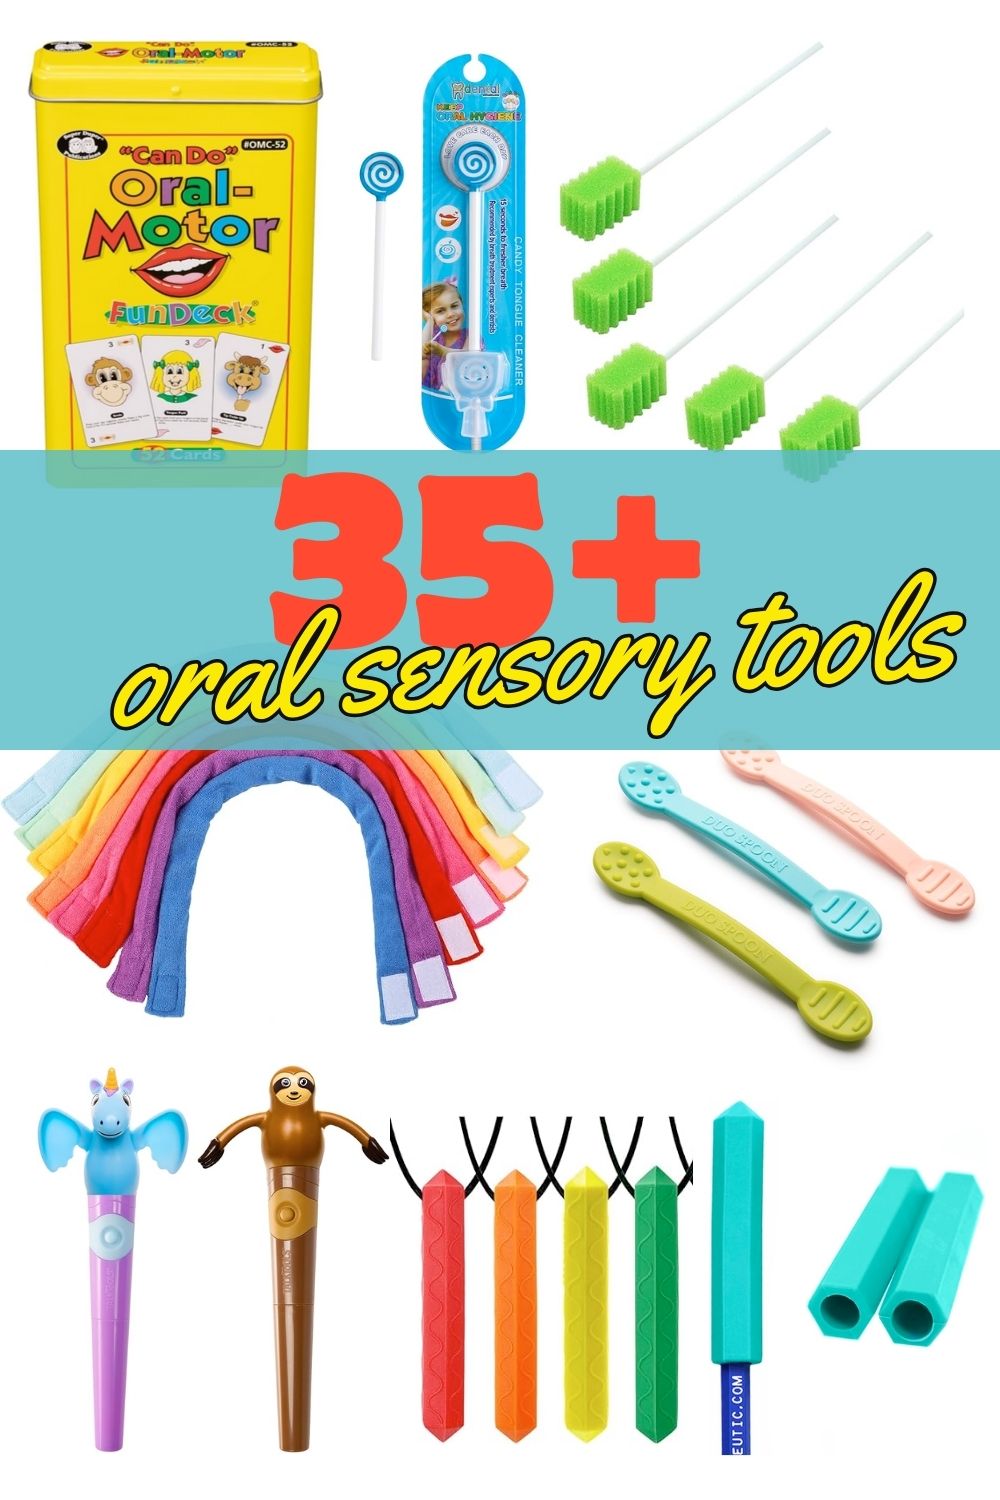 oral-sensory-tools